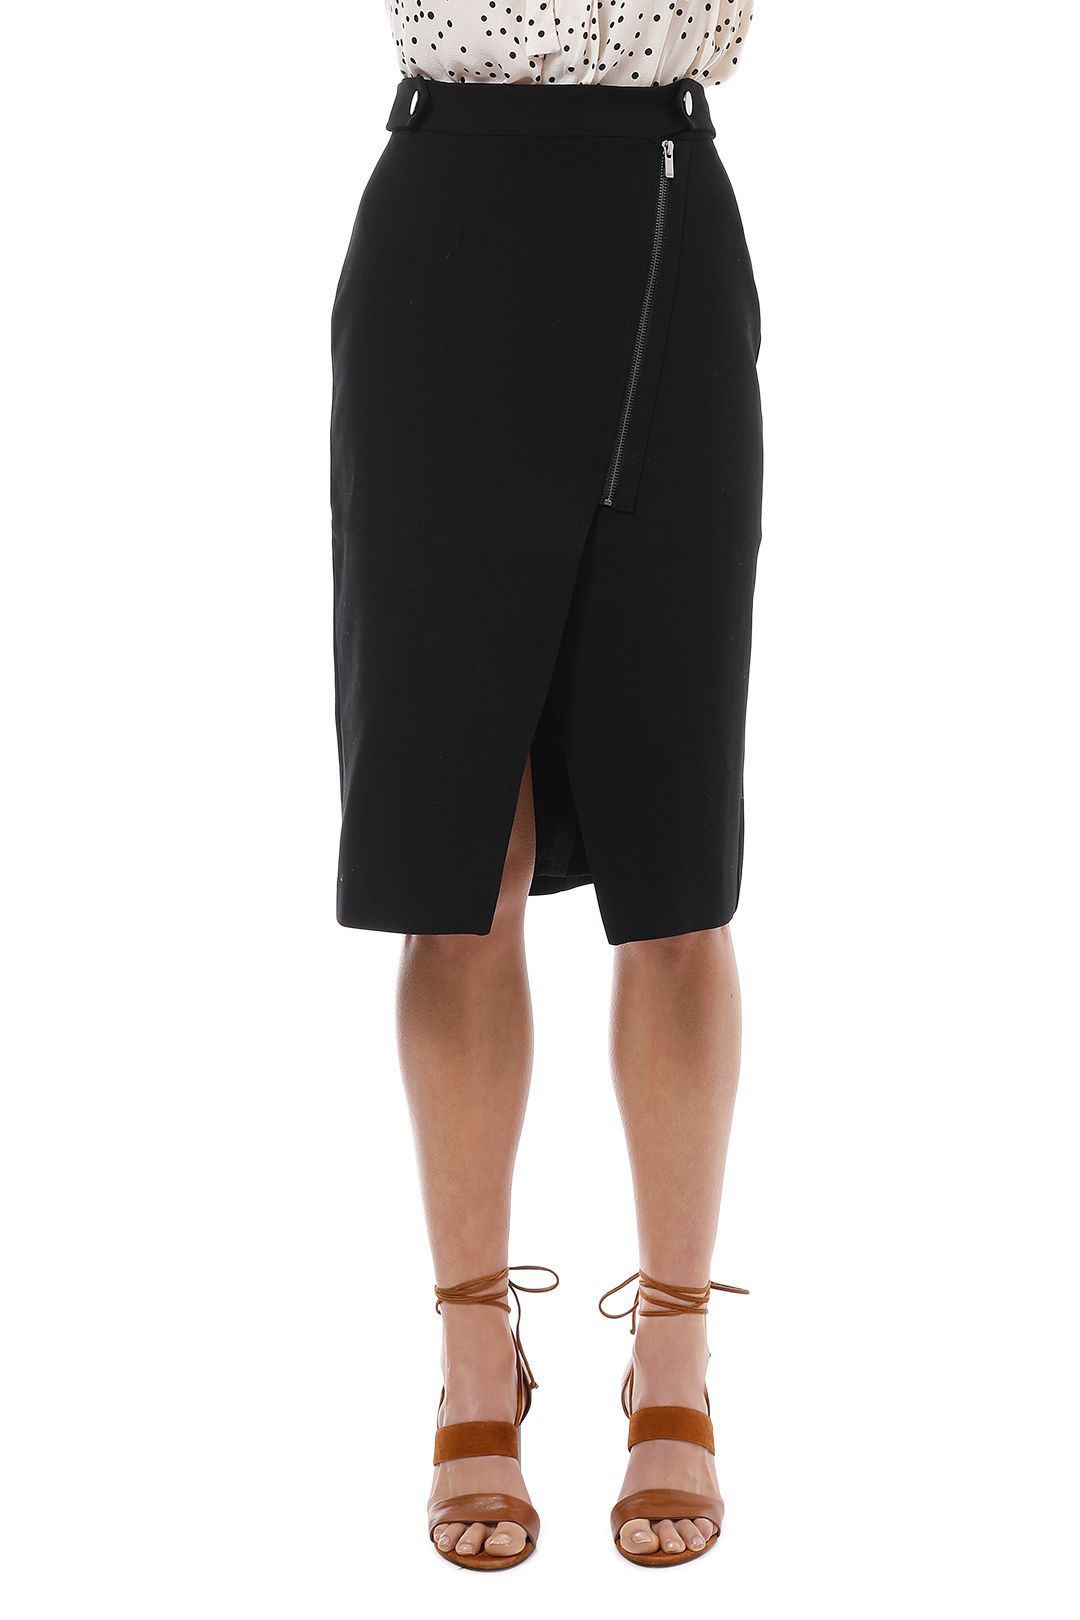 Saba - Trinity Slim Skirt - Black - Front Detail